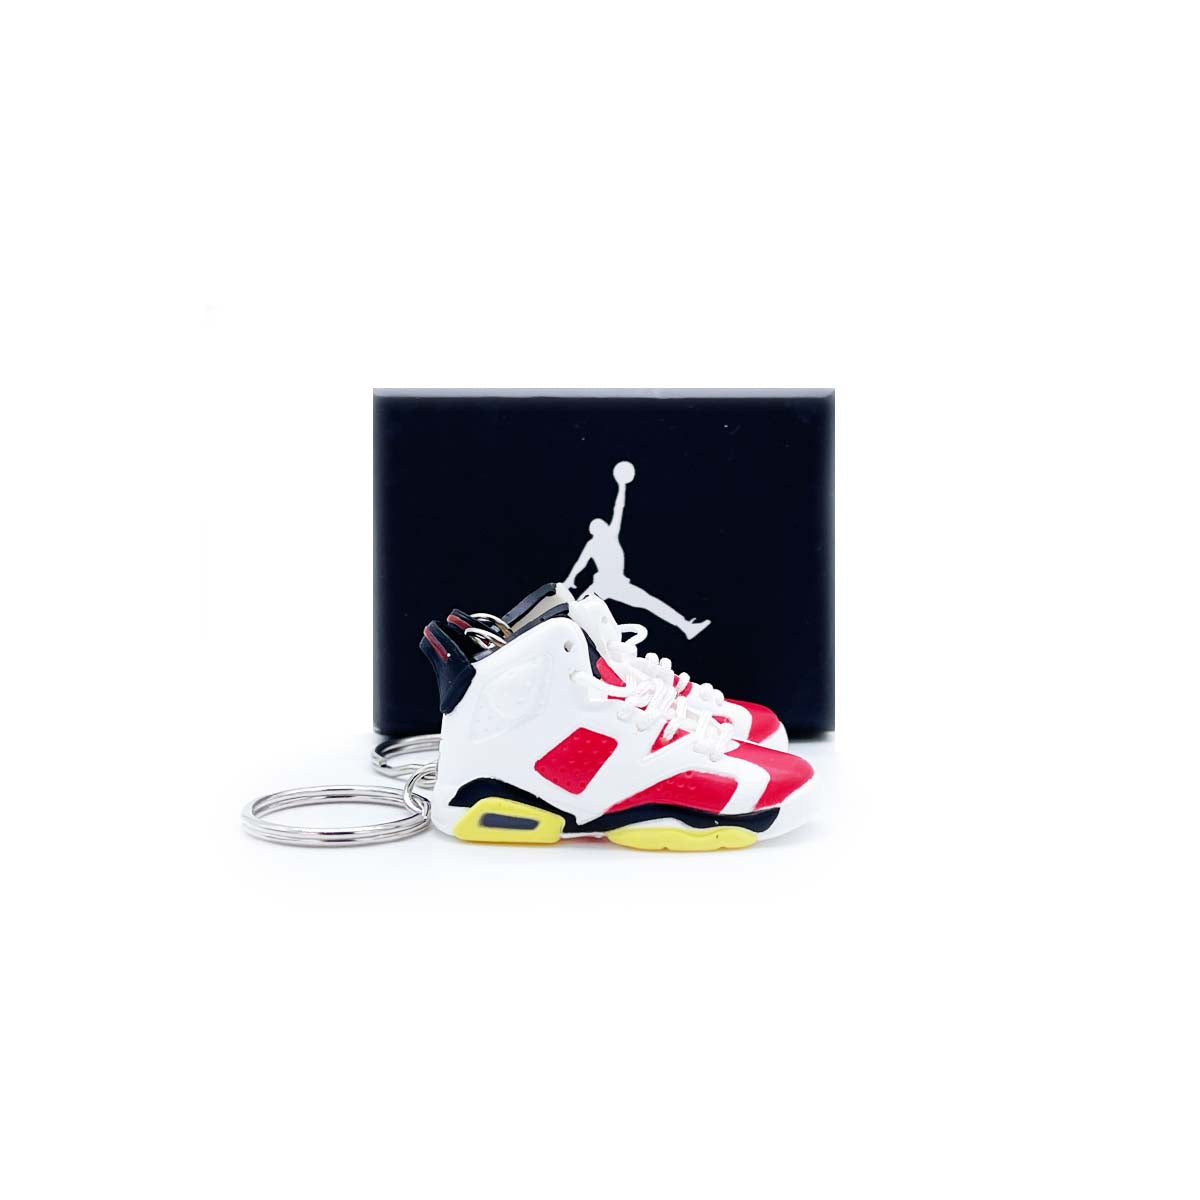 3D Sneaker Keychain- Air Jordan 6 Carmine Pair